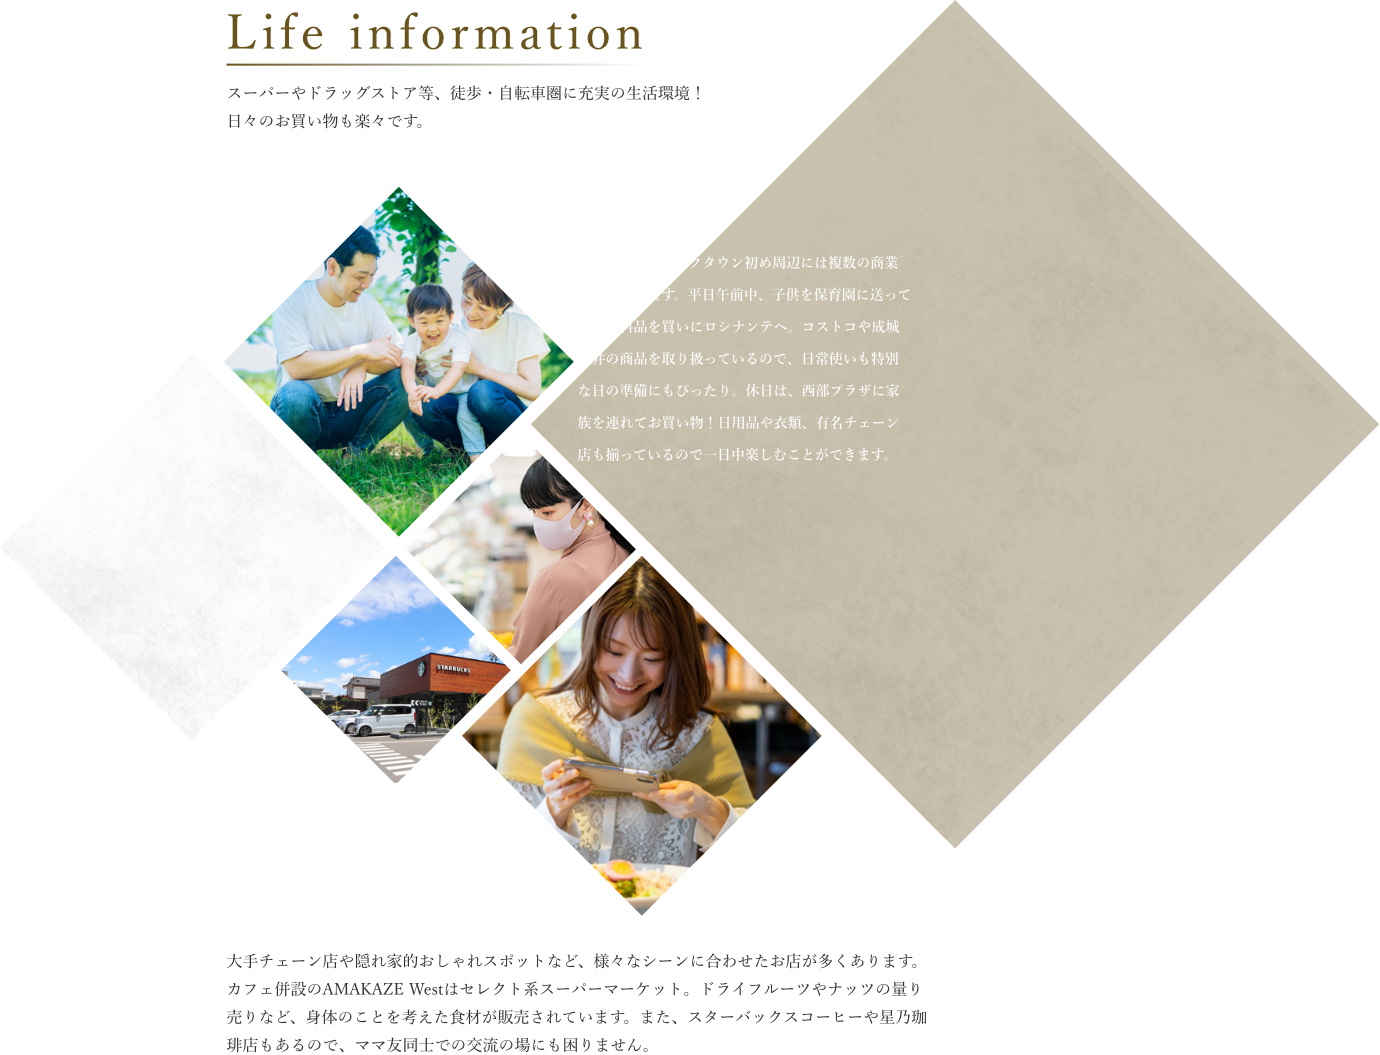 Life information